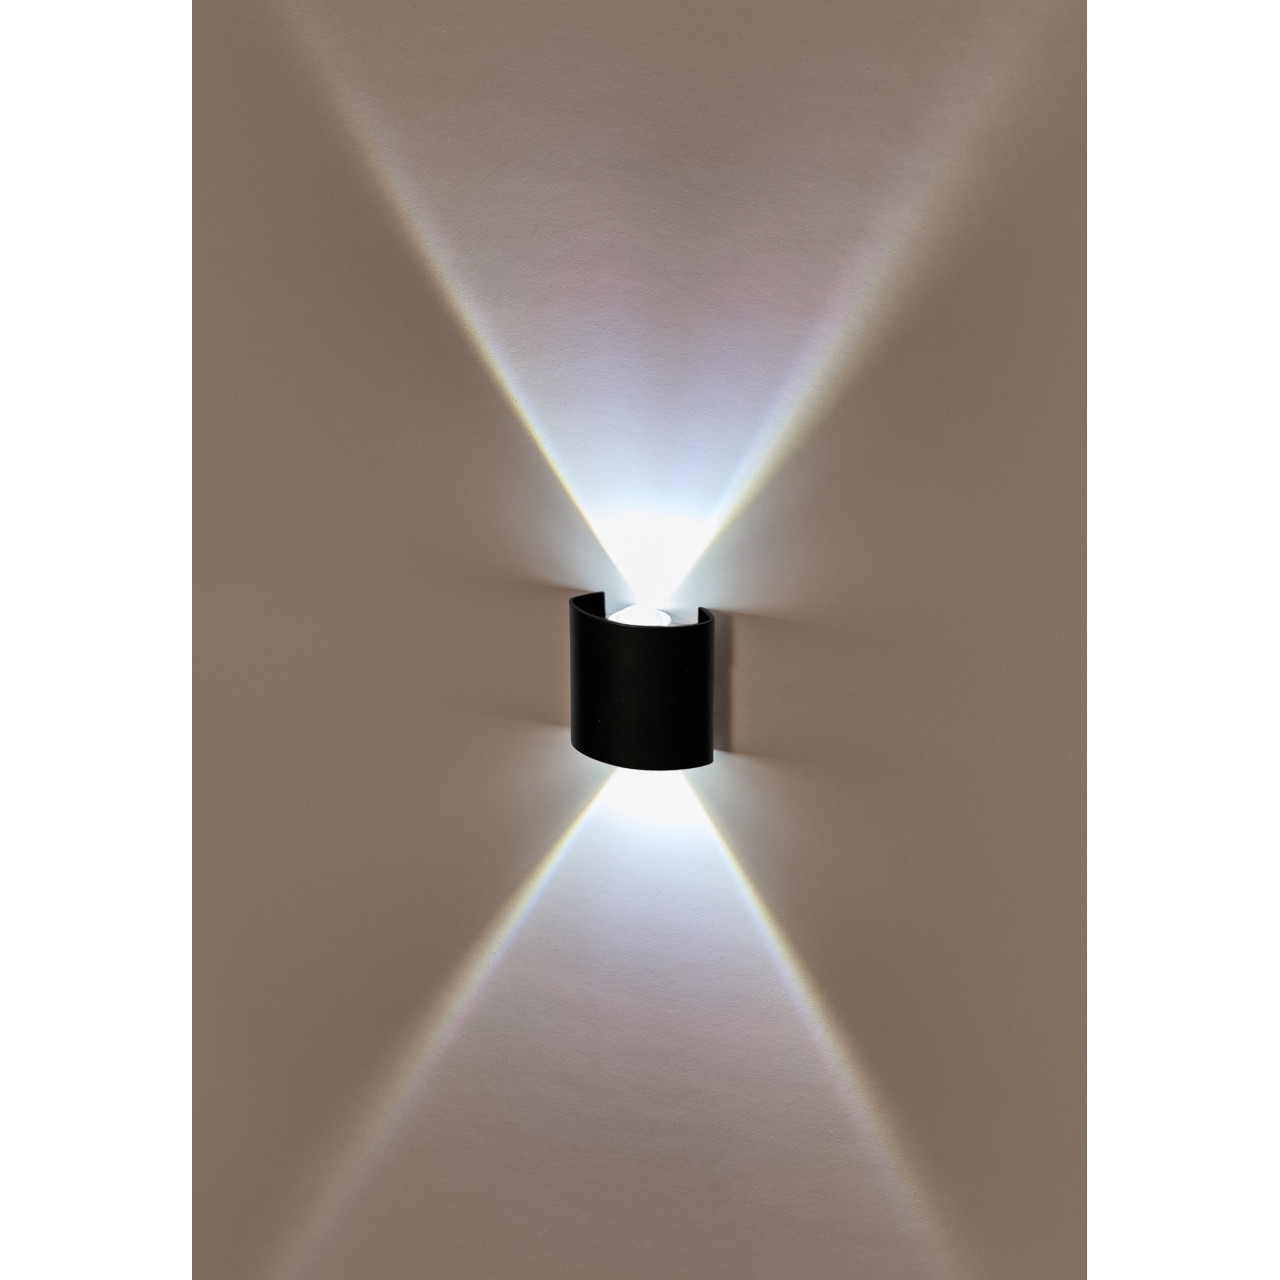 Светильник настенный LED 2x1W 4200K Черный 220V IP54 IL.0014.0001-2 BK